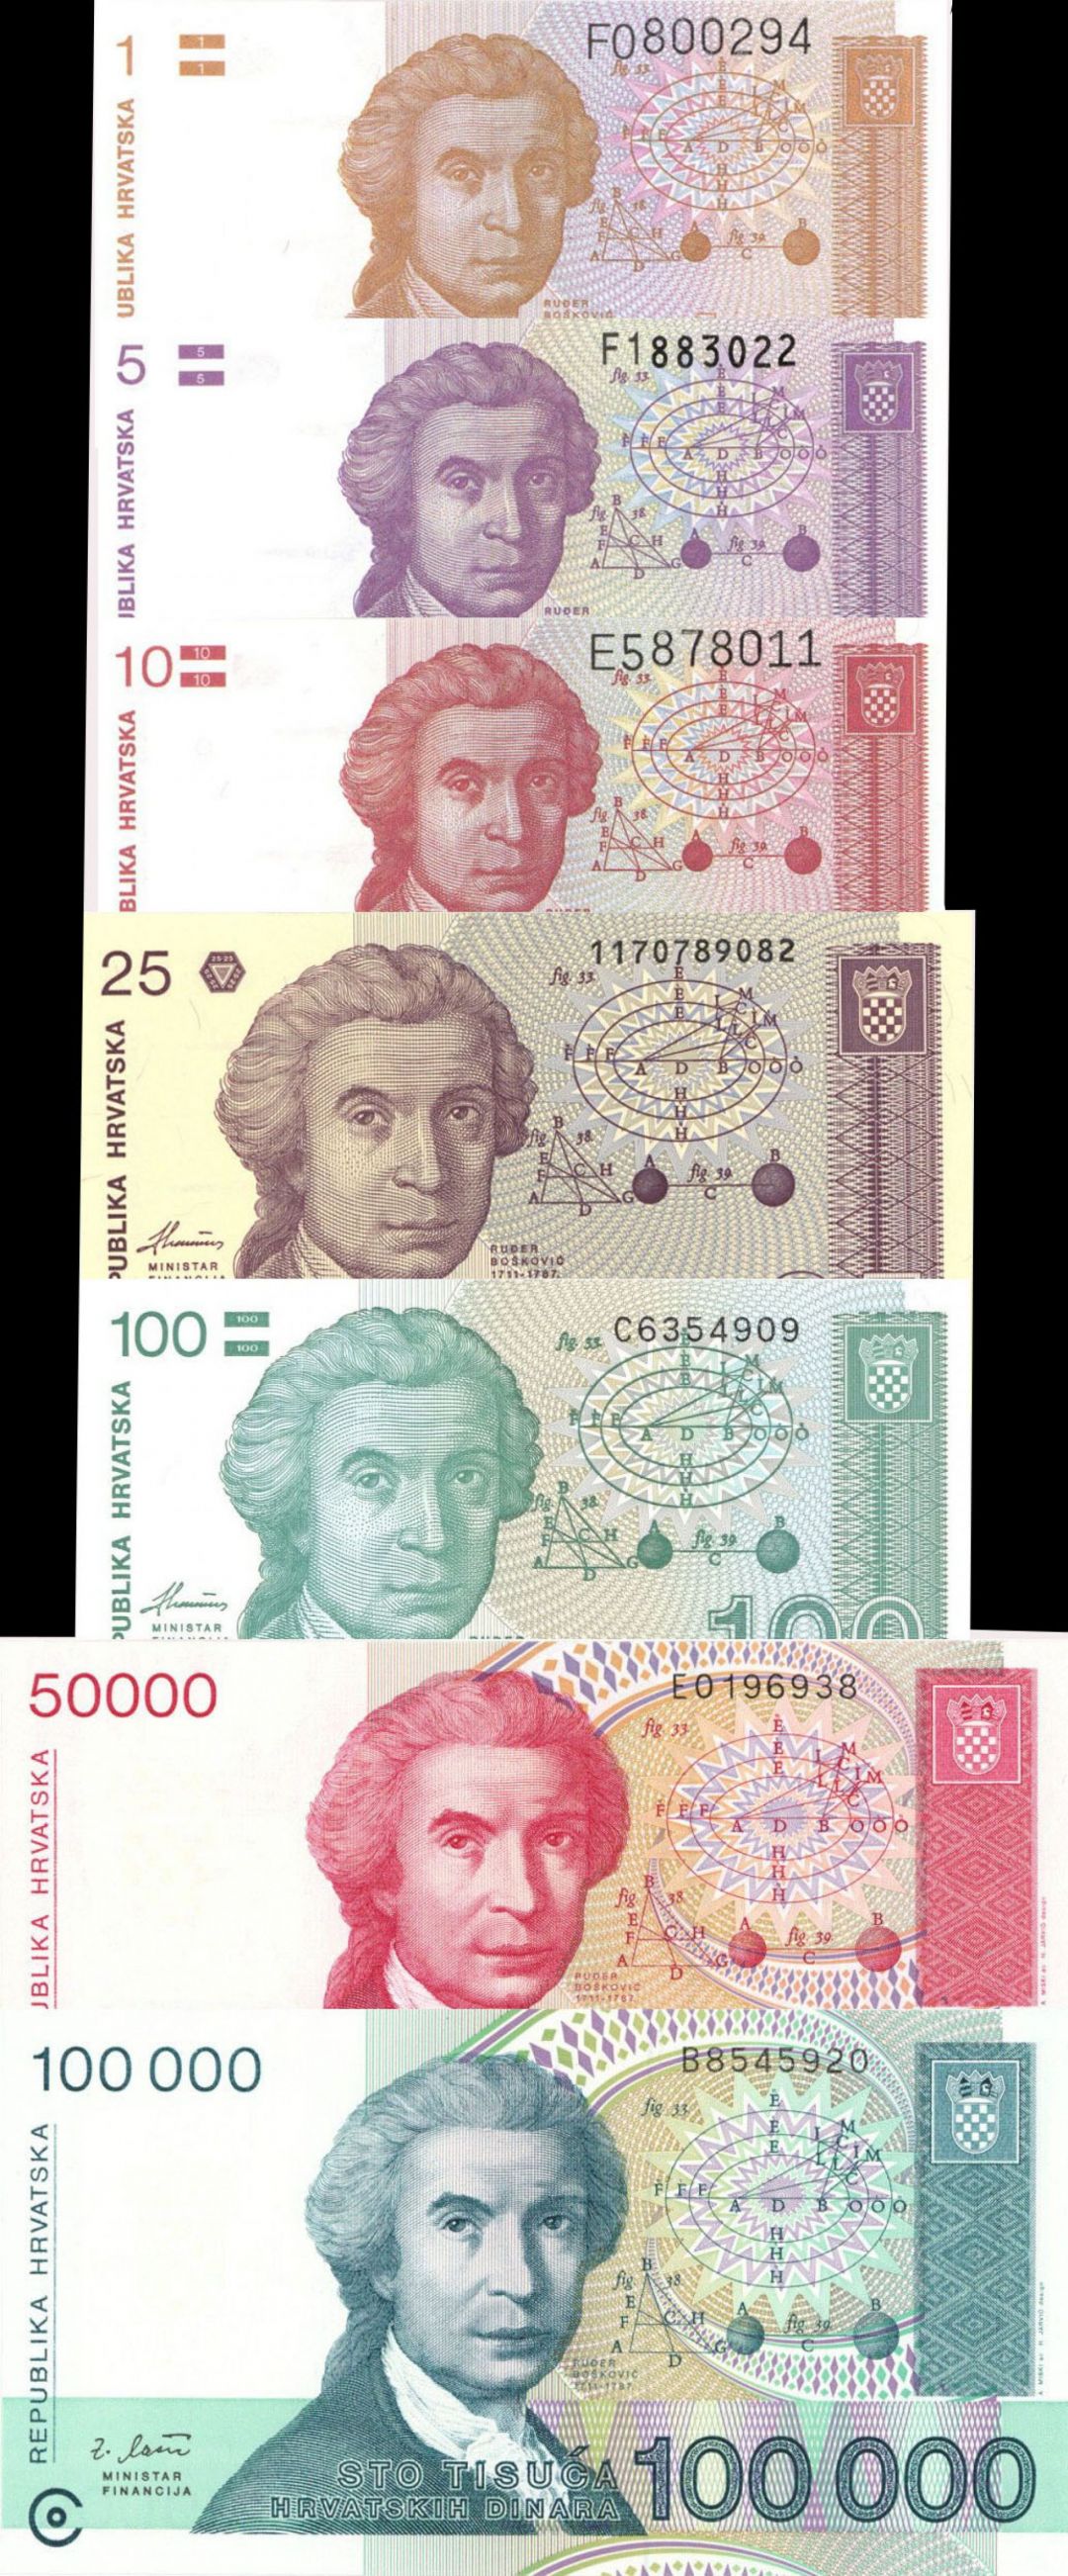 Croatia Set of 7 - P-16a, 17a, 18a, 19a, 20a, 26a, 27a - 1991 dated Foreign Paper Money Group - 1, 5, 10, 25, 100, 50000, 100000 Dinars